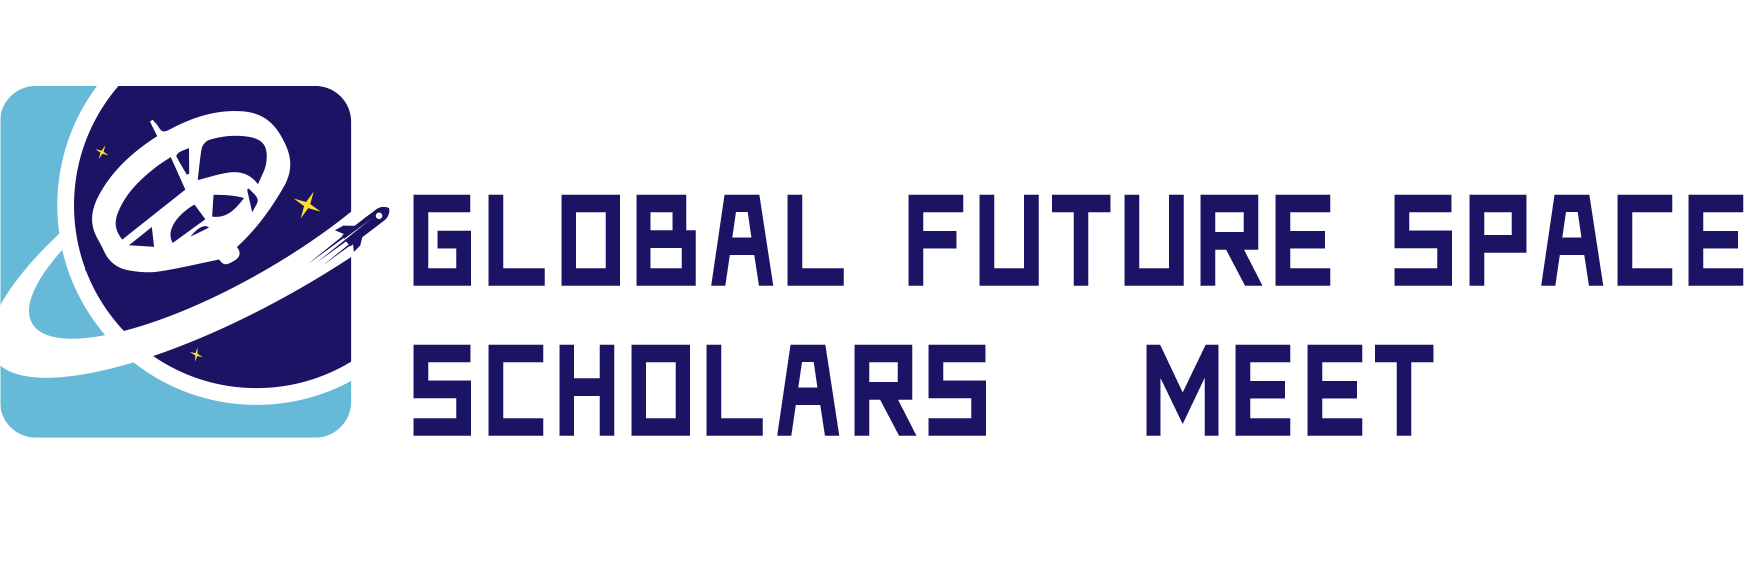 Glbal Future Space Scholars Meet